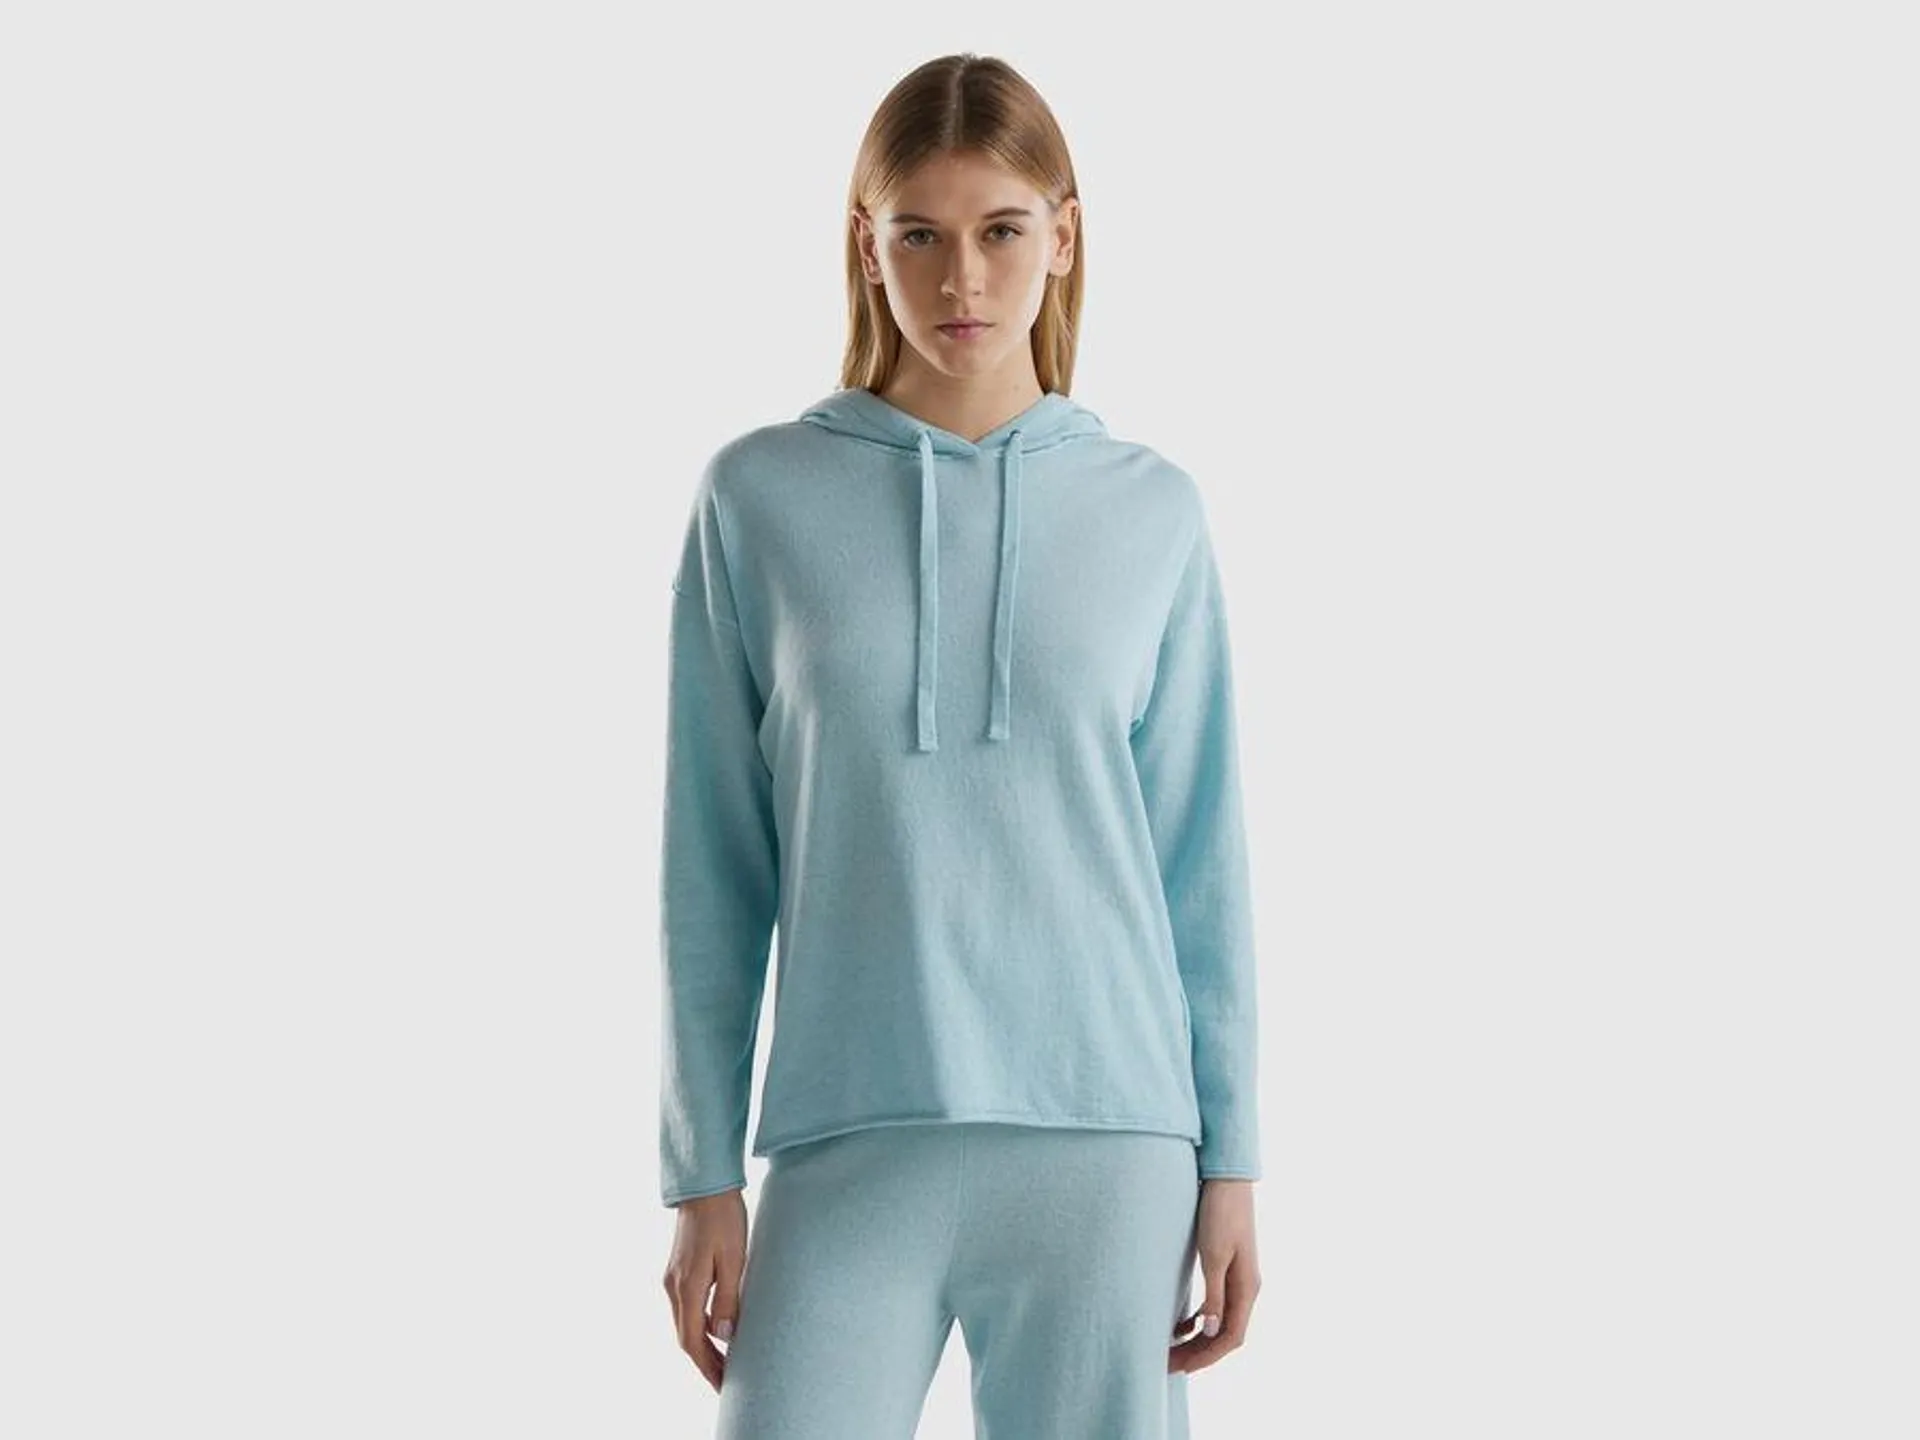 Aqua cashmere blend sweater with hood